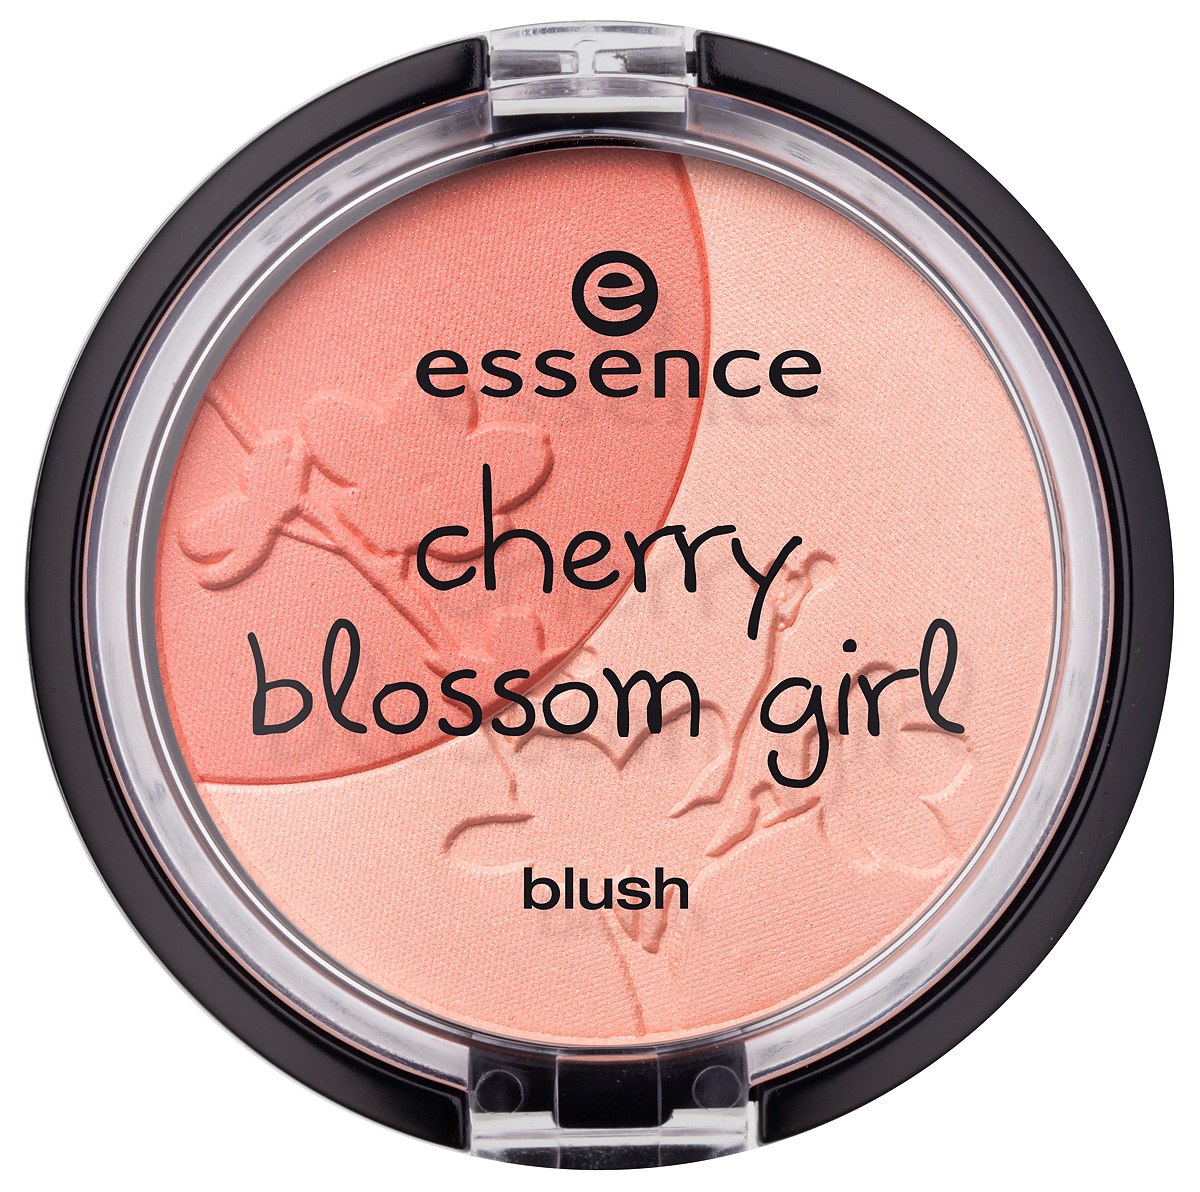 essence cherry blossom girl – blush